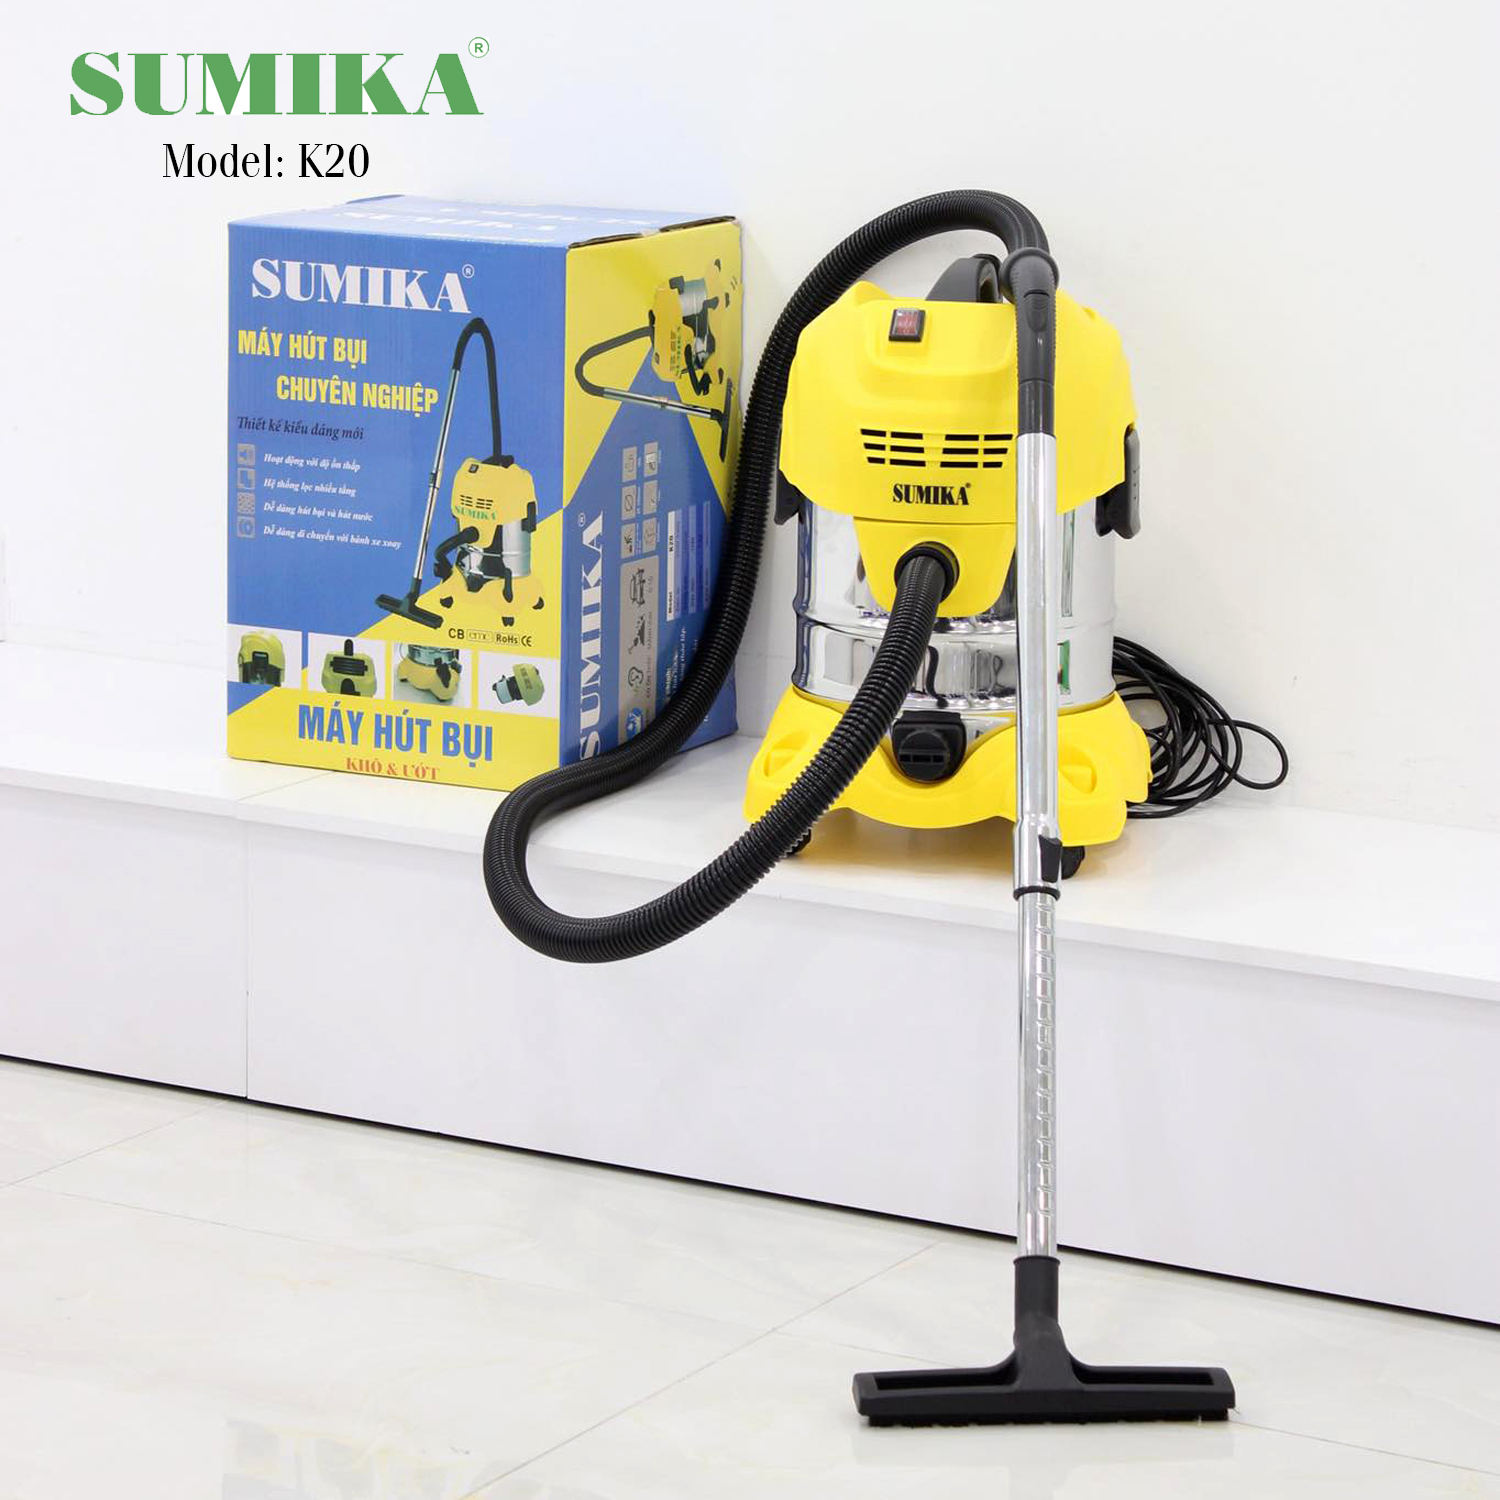 Sumika K20 - 1600W water vacuum cleaner, Hepa filter